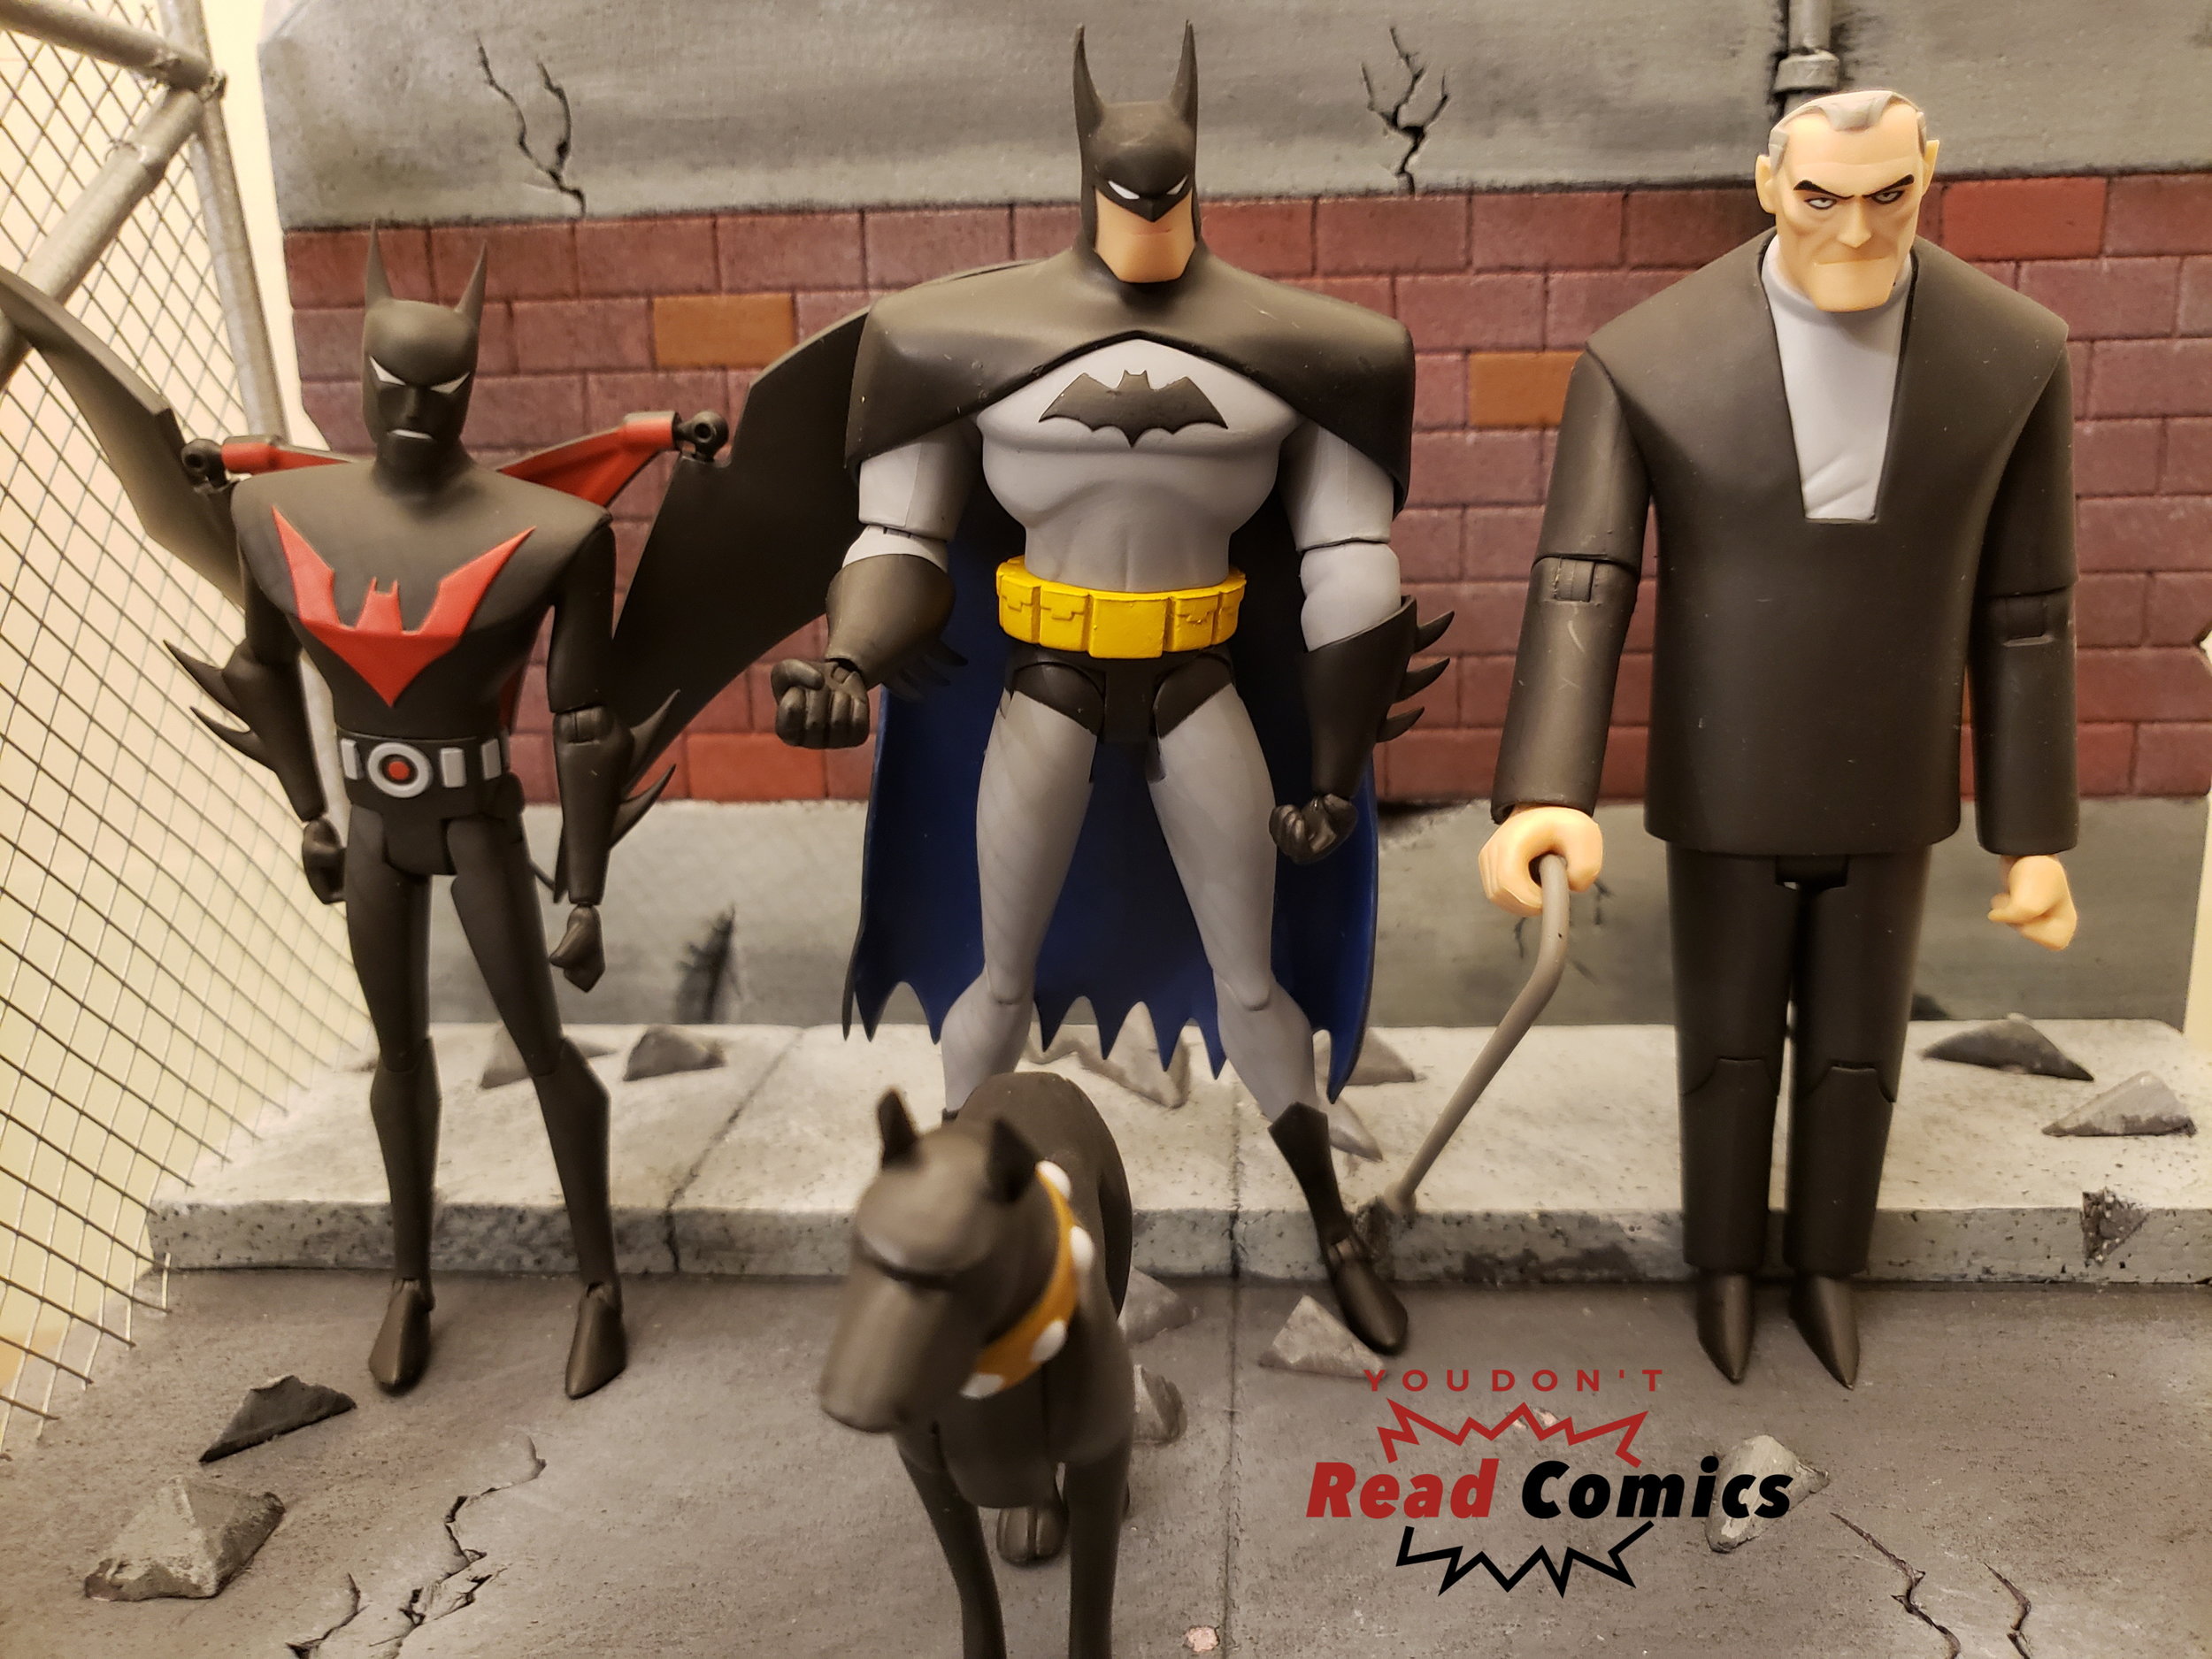 justice league animated figures